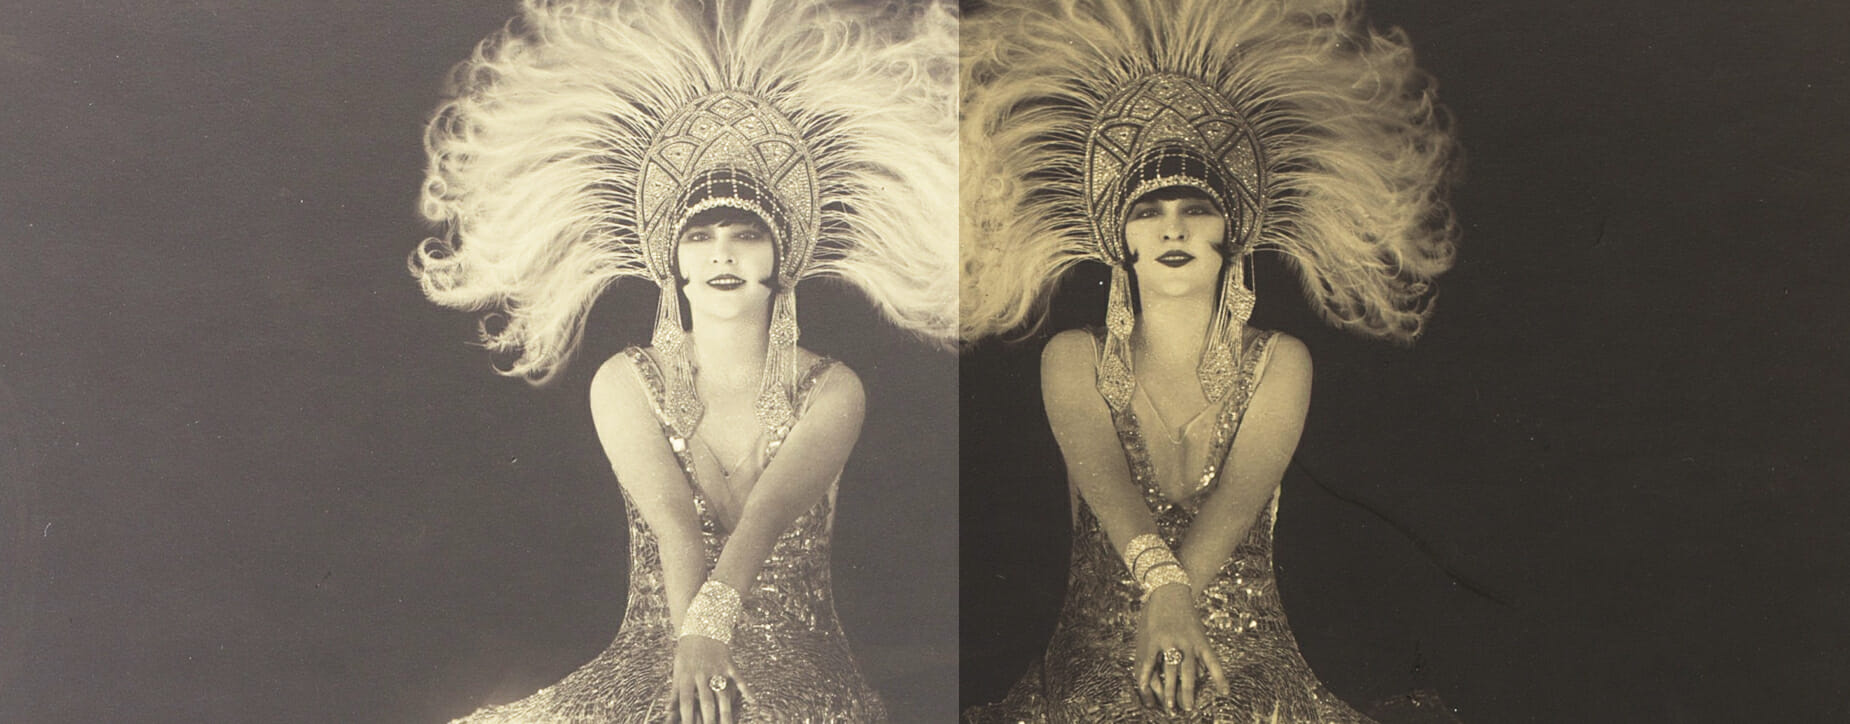 1920s print photo fade